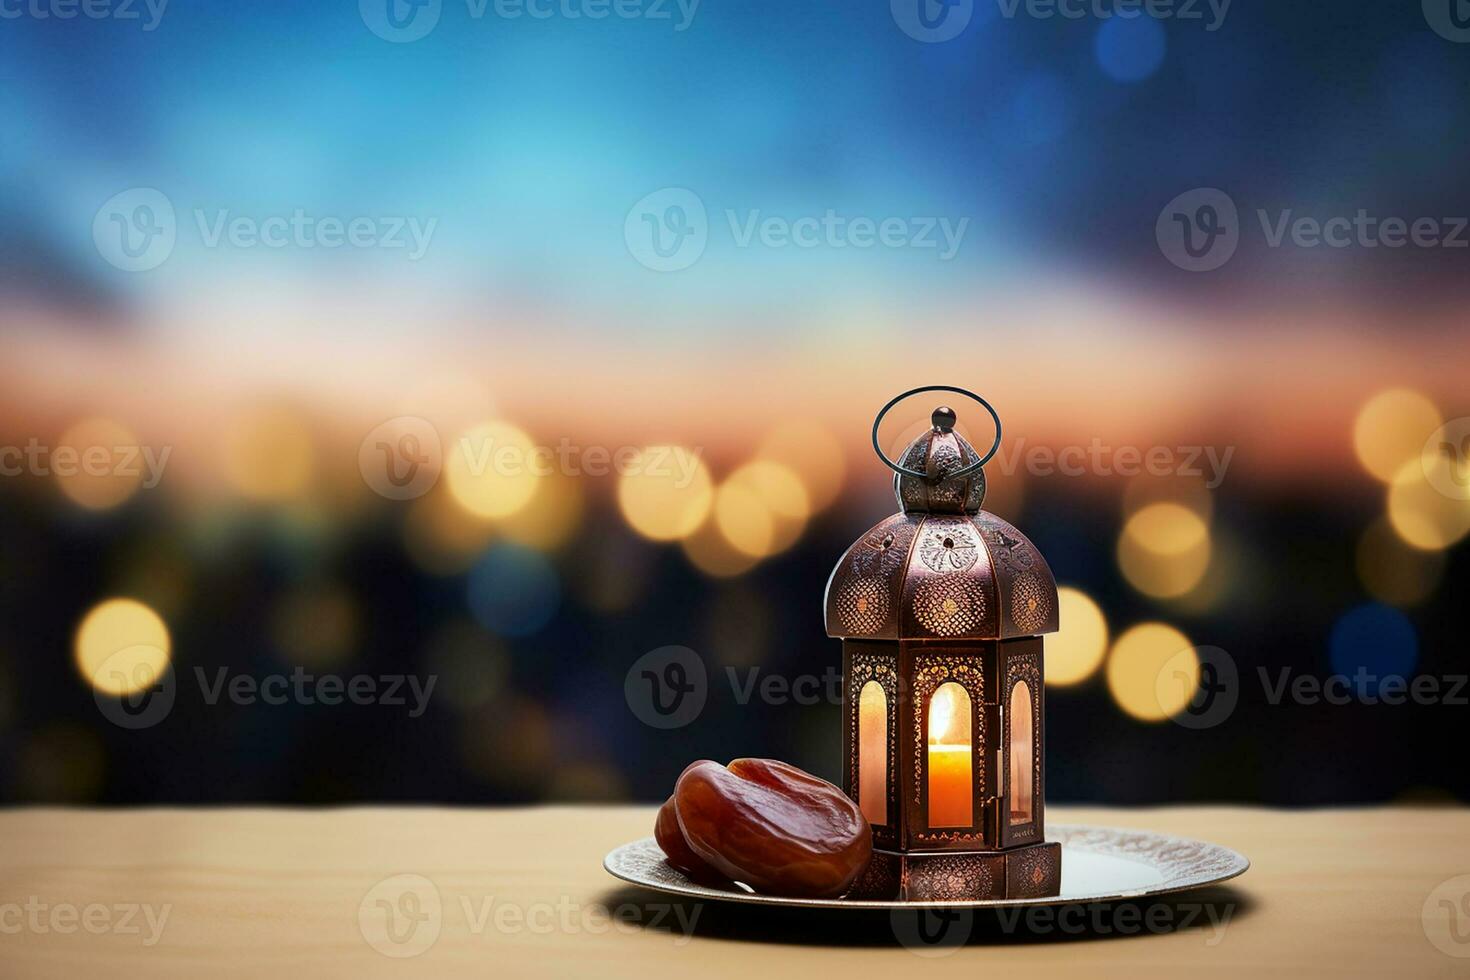 ai gegenereerd lantaarn met schemer lucht en stad bokeh licht achtergrond foto